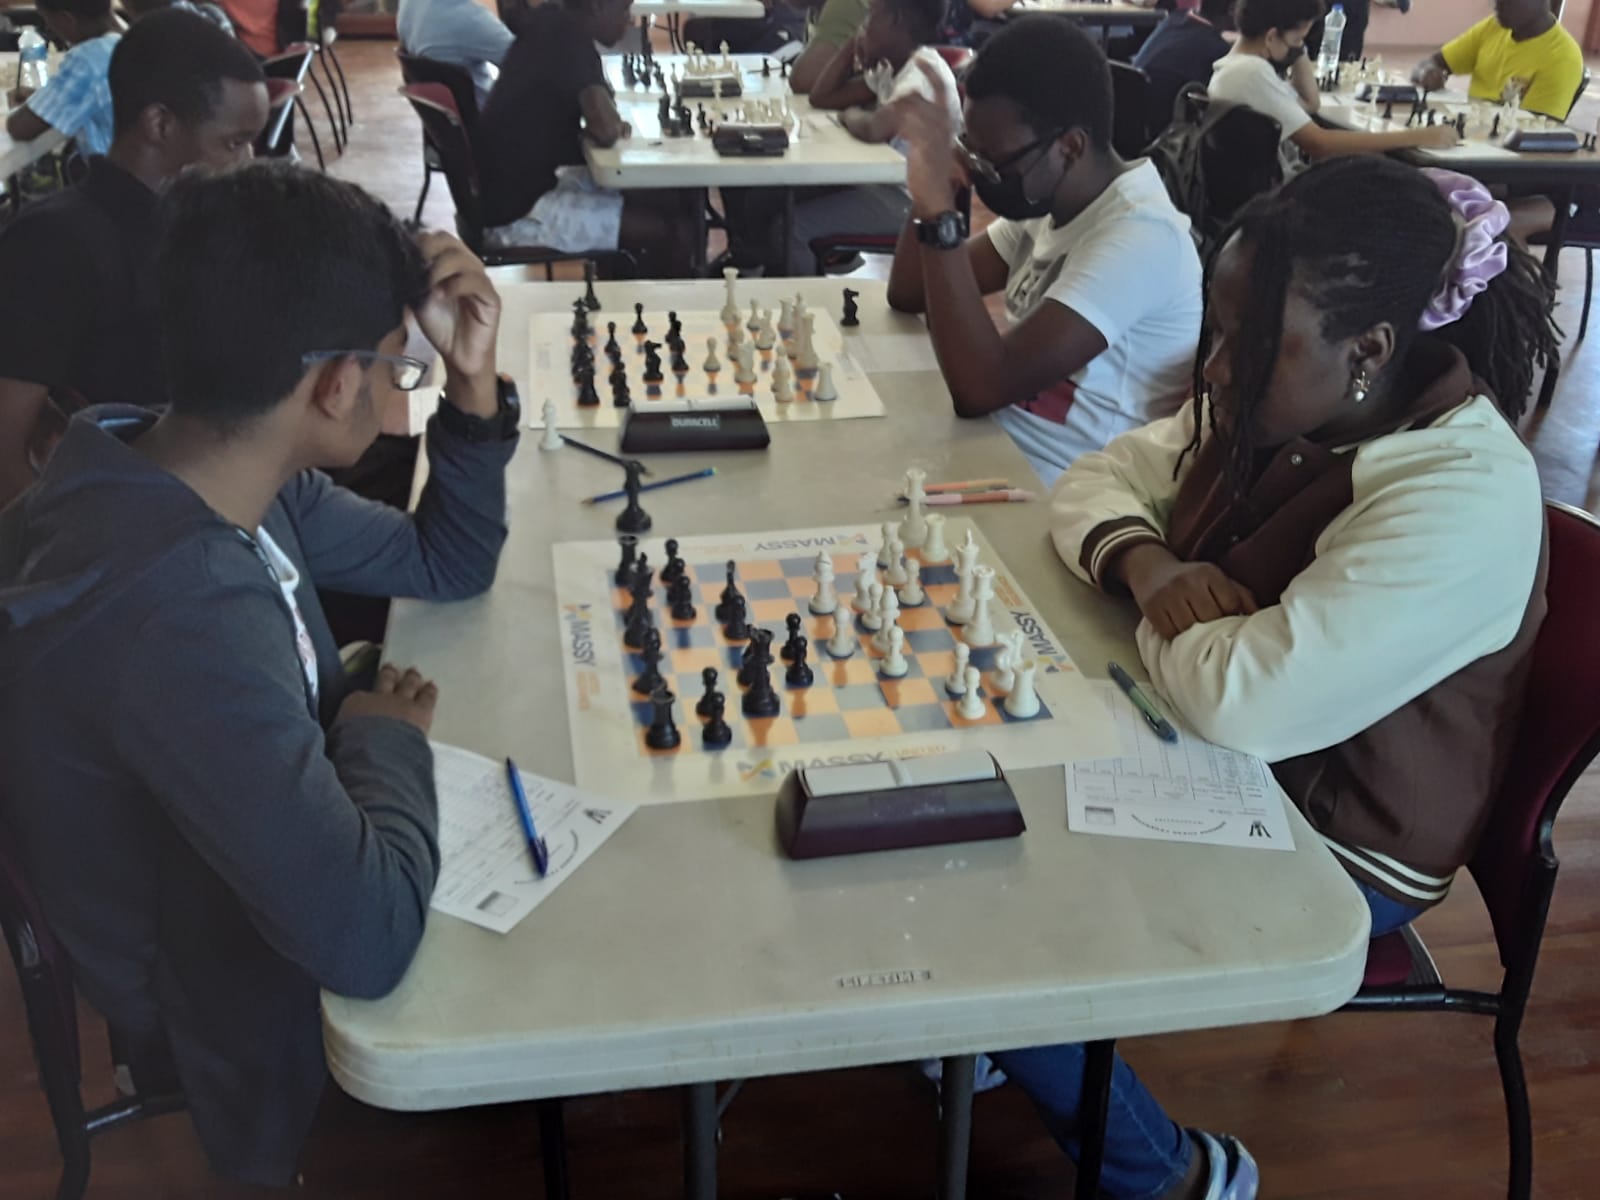 WCA 41st Online Internal Tournament - Live Chess Tournament